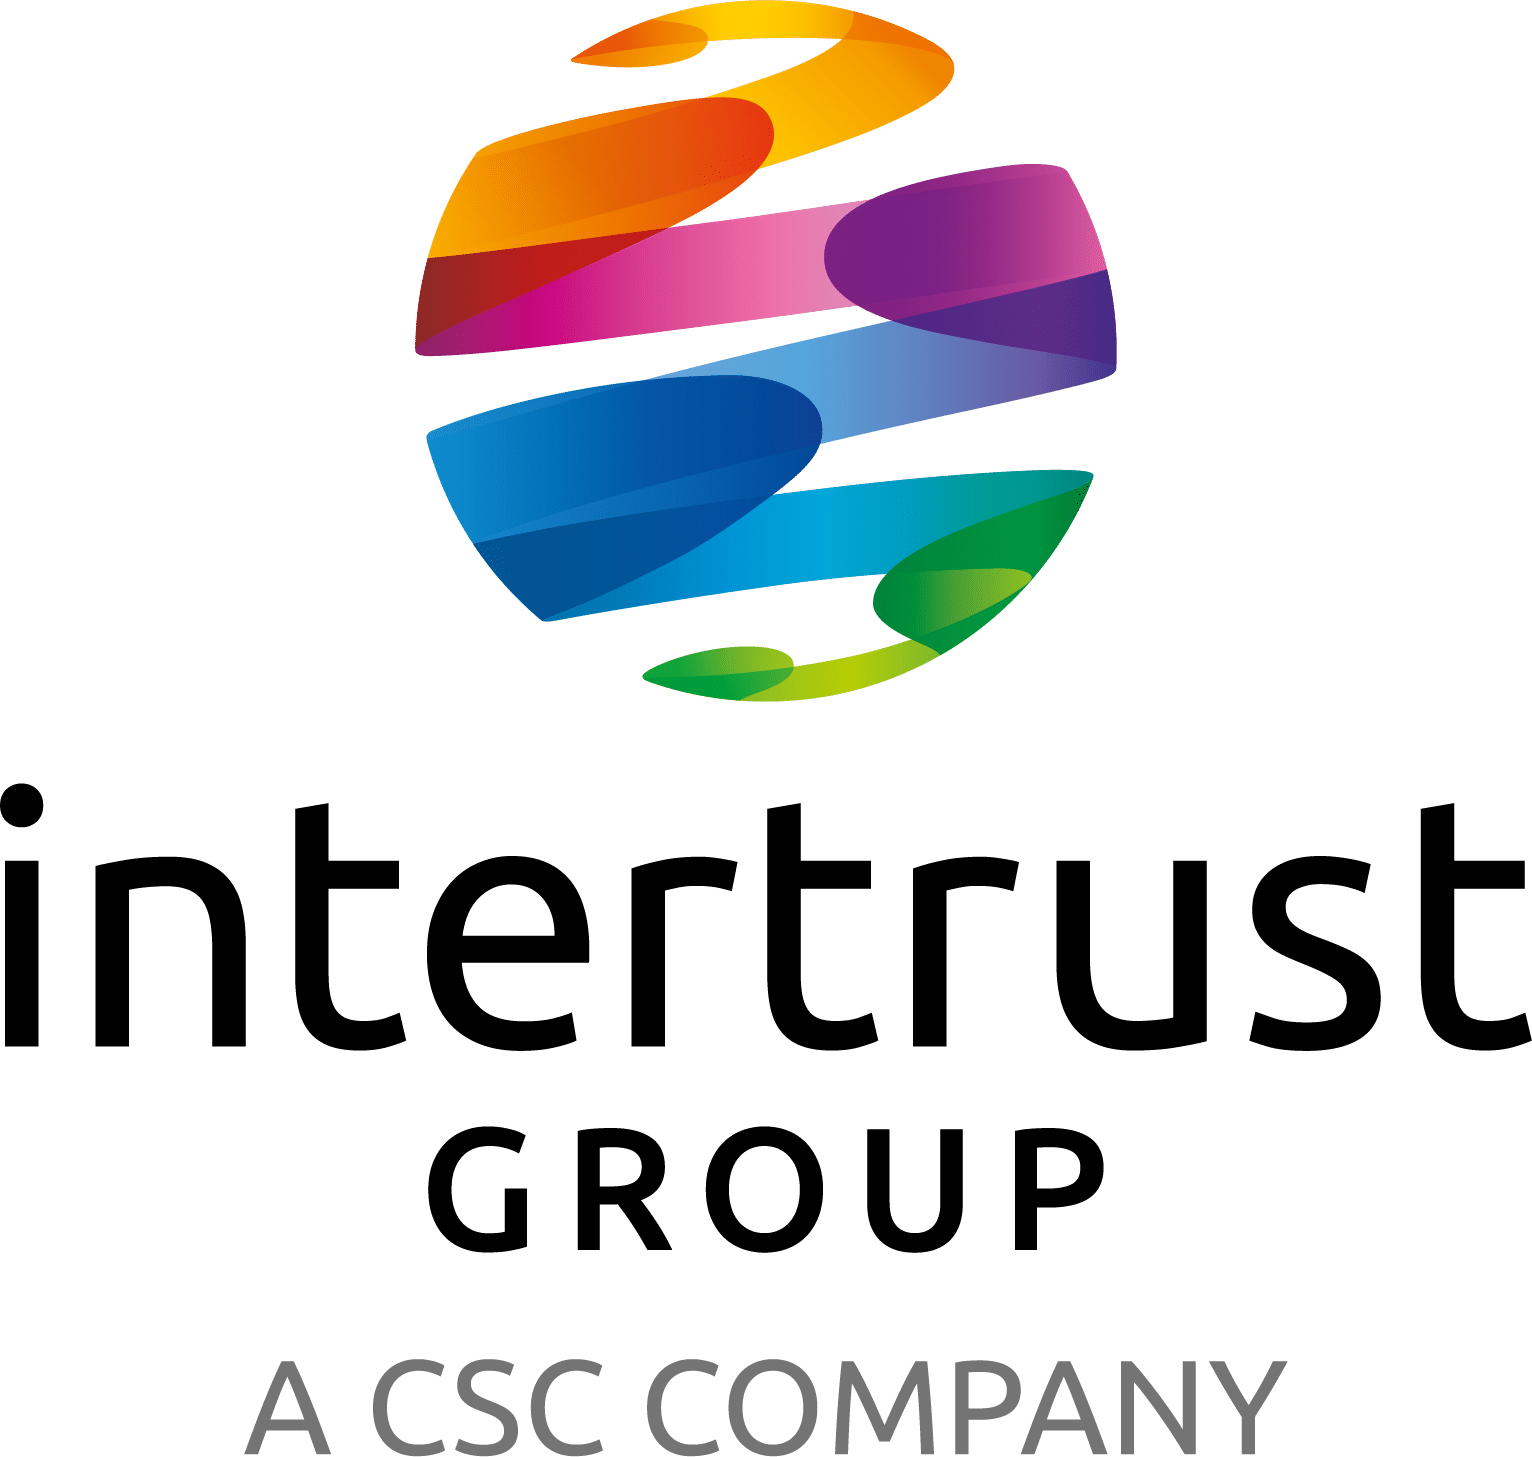 INTERTRUST GROUP CSC portrait logo RGB 300dpi